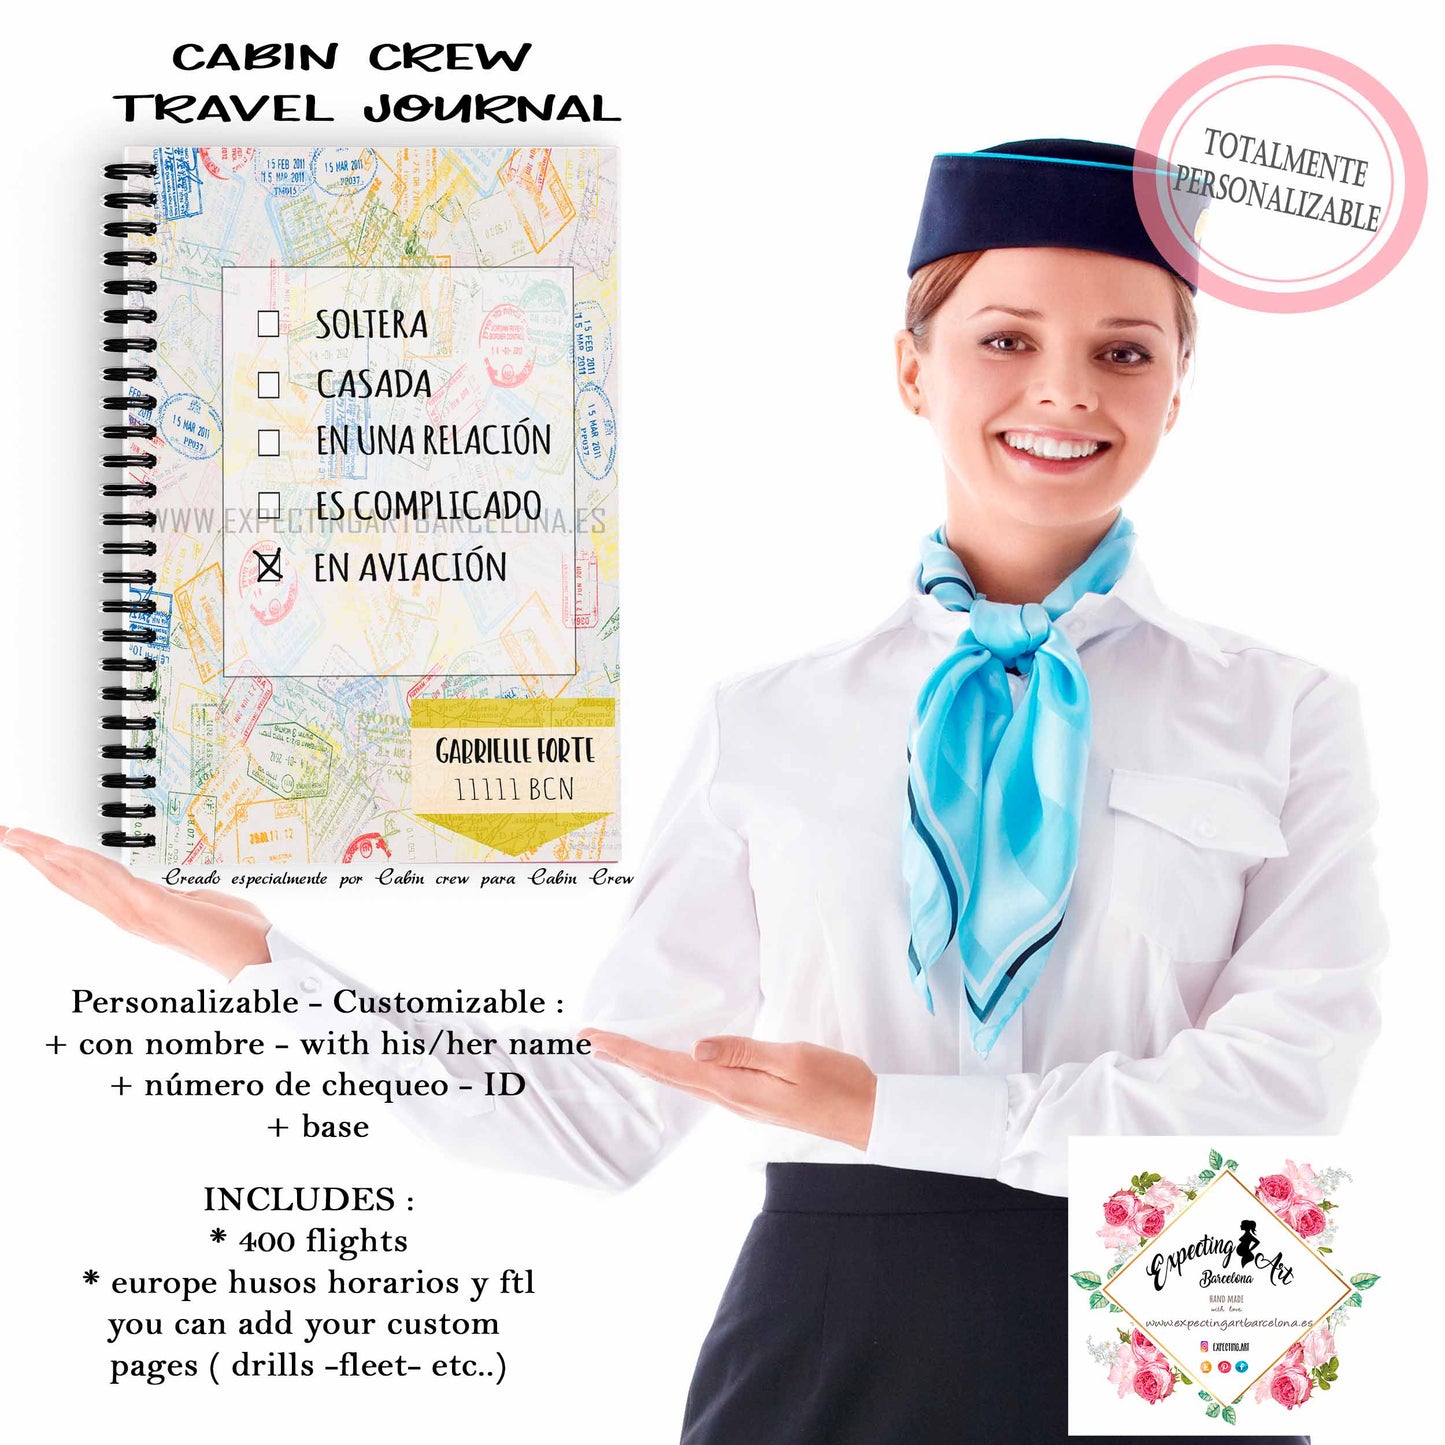 Agenda de vuelo para cabin crew personalizable. Modelo " Estado civil: En aviación"